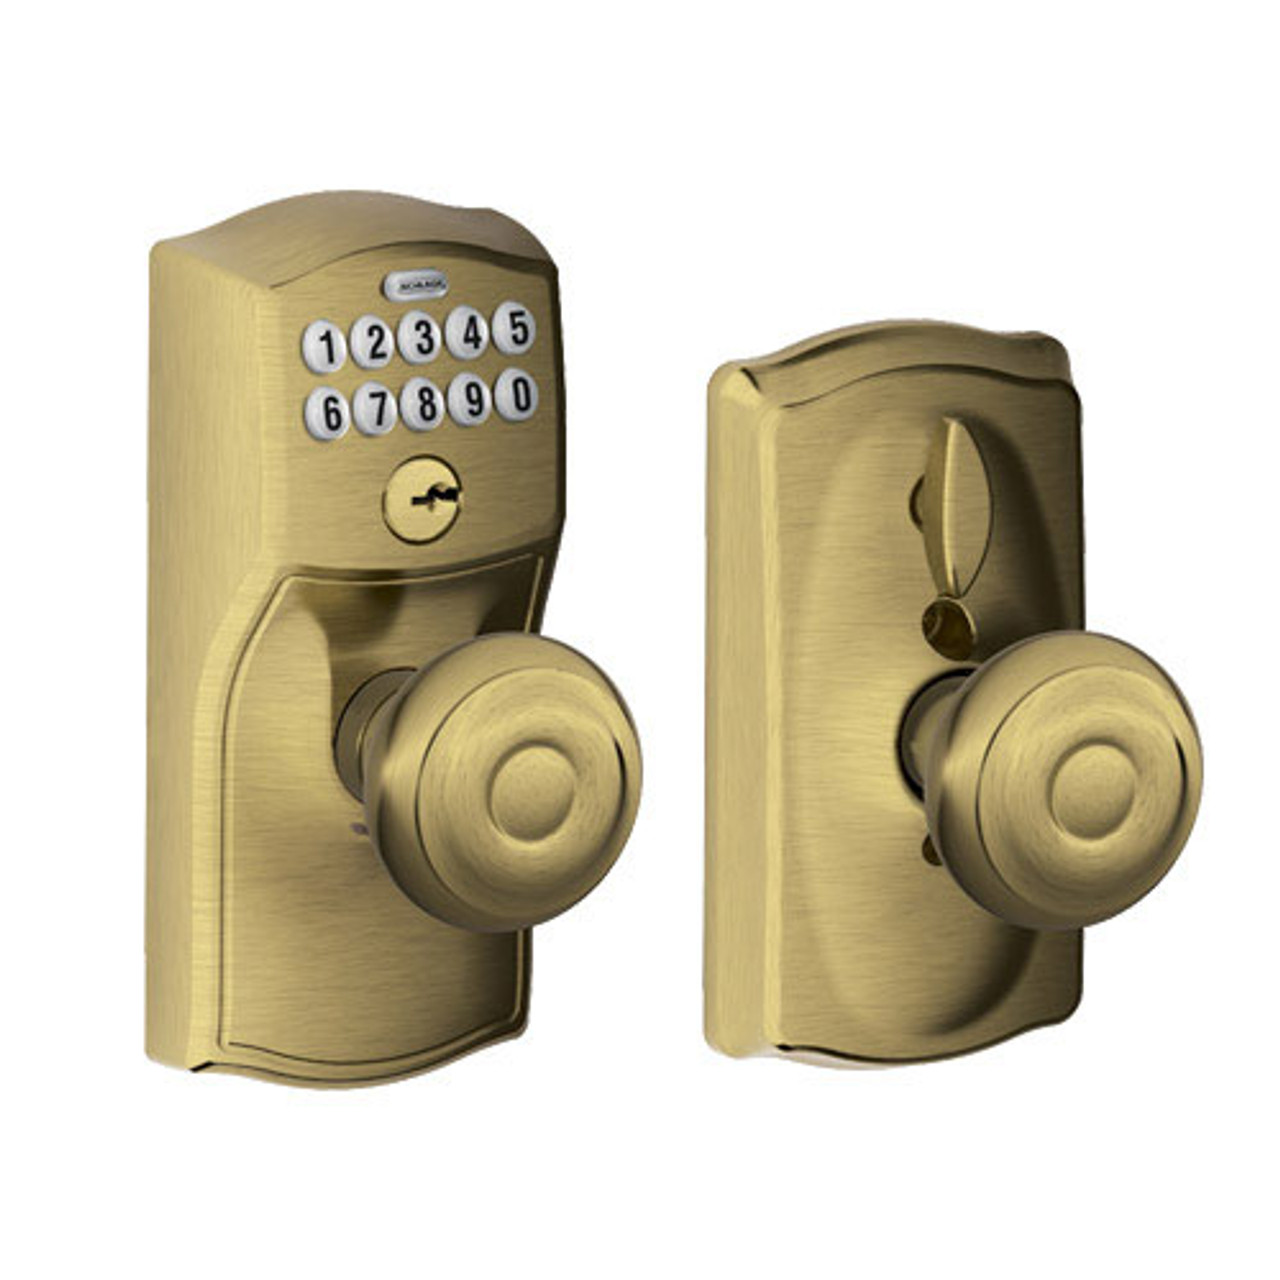 FE595-CAM-609-GEO Schlage Electrical Keypad Deadbolt Lock in Antique Brass